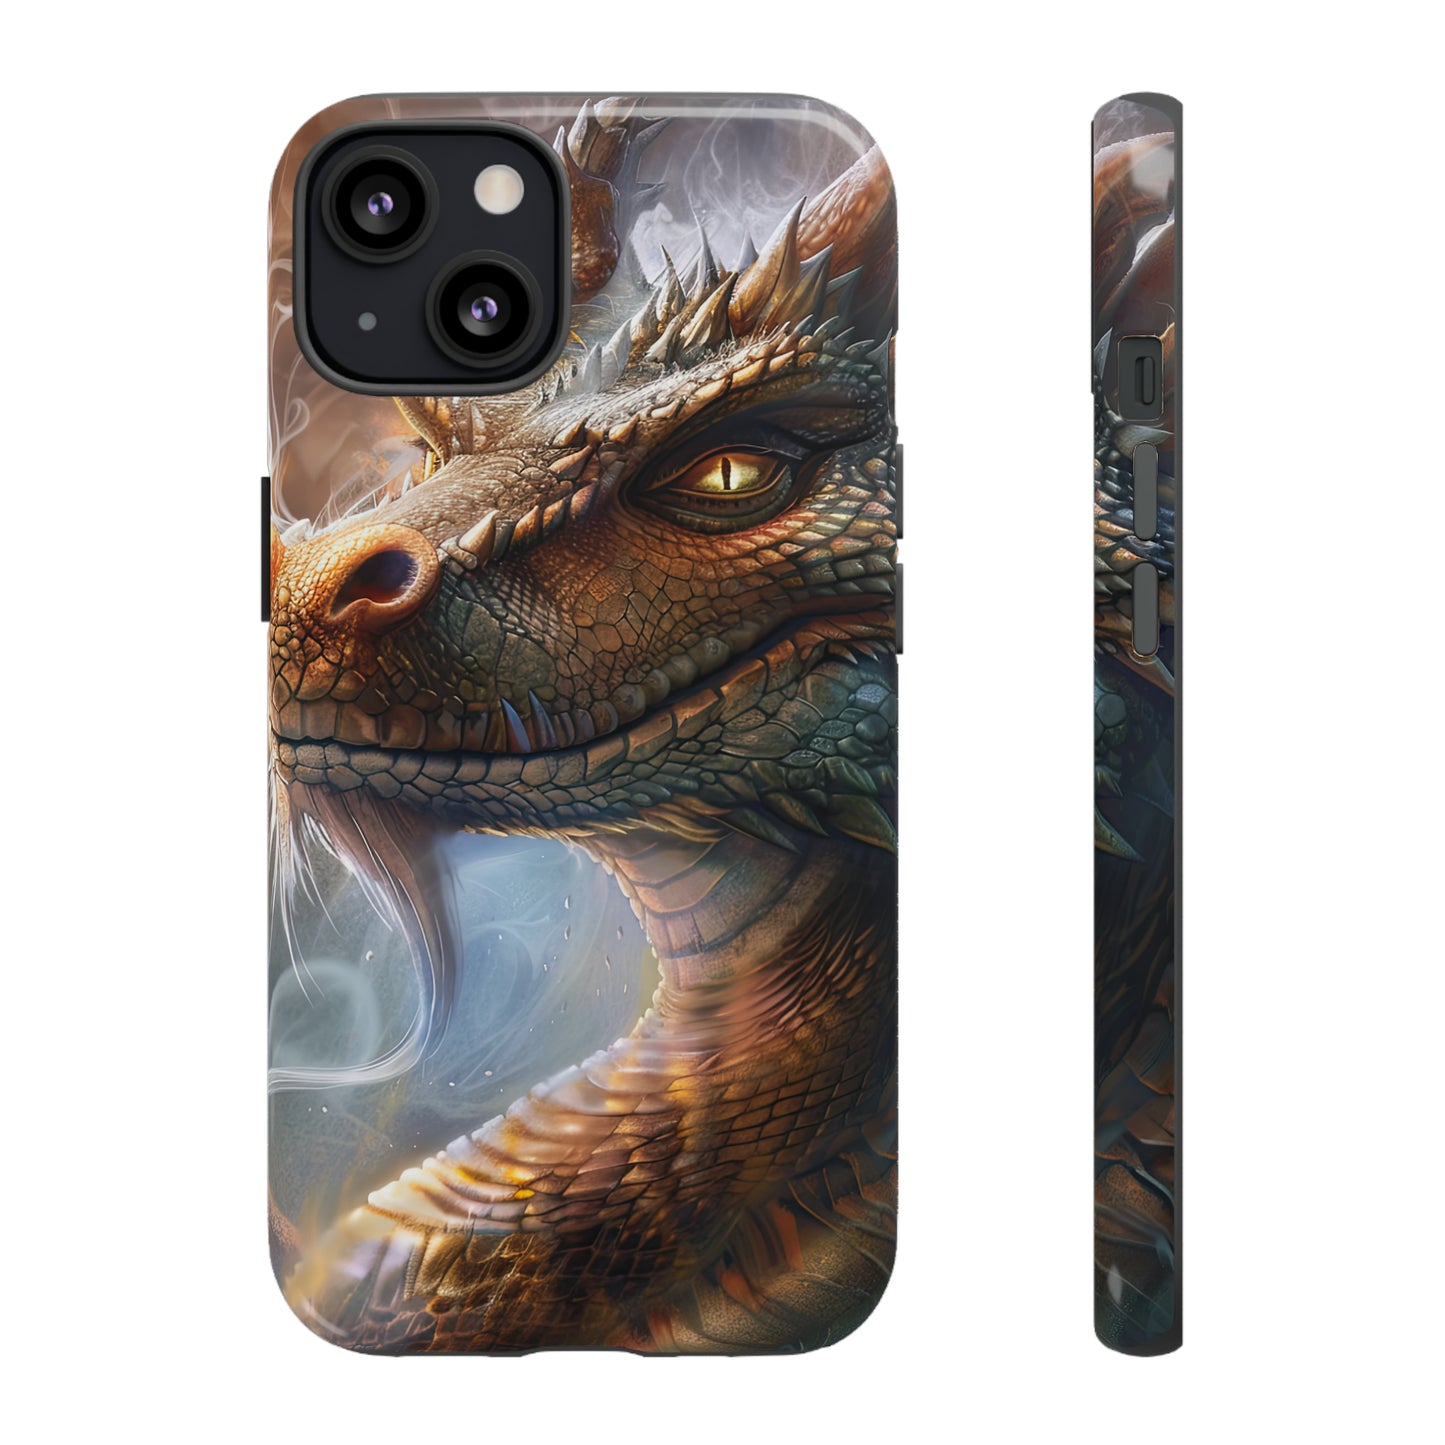 Tough Mobile Phone Cases: Smoking Dragon